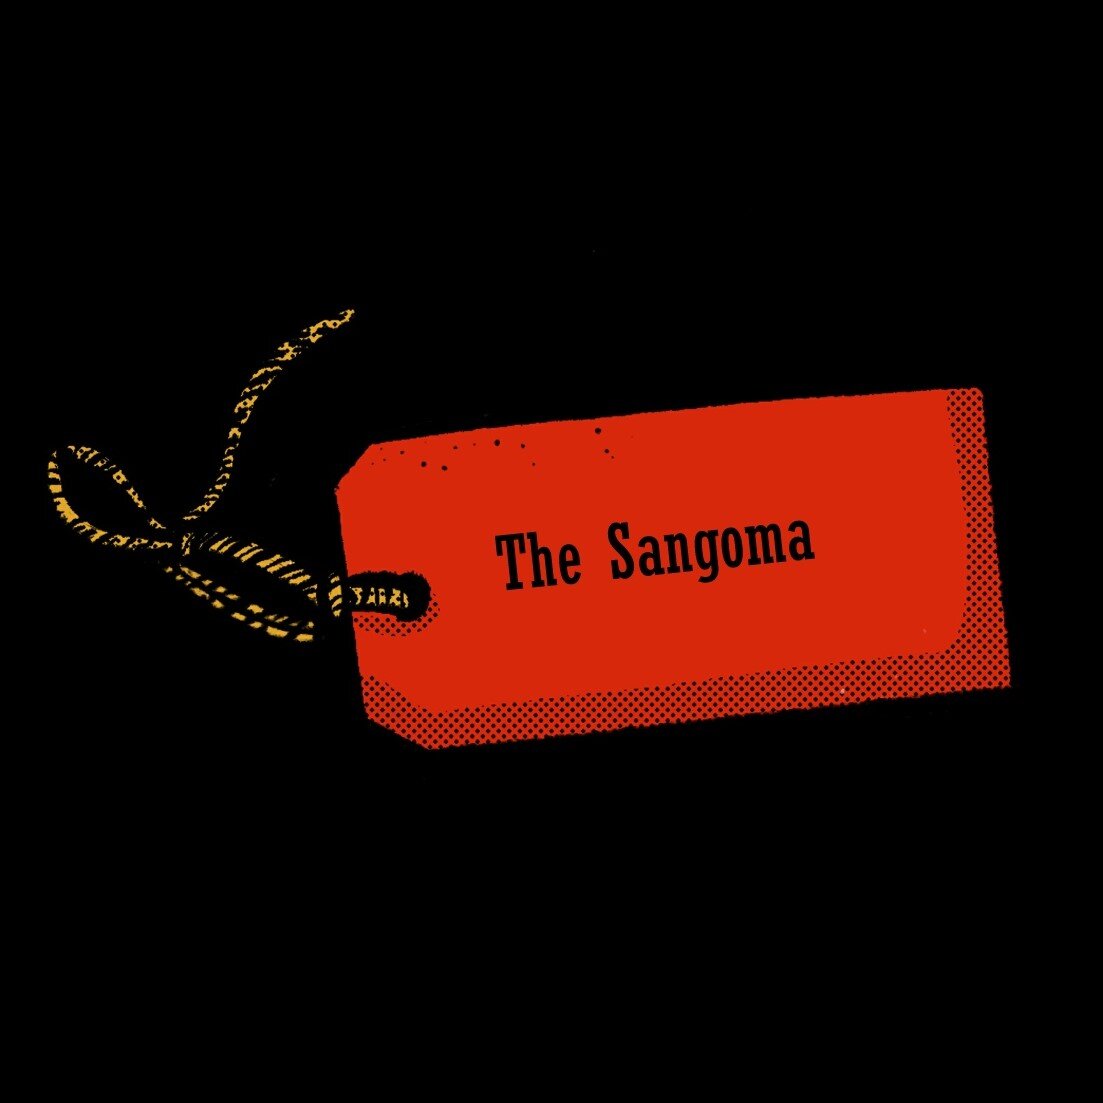 Episode 8: The Sangoma